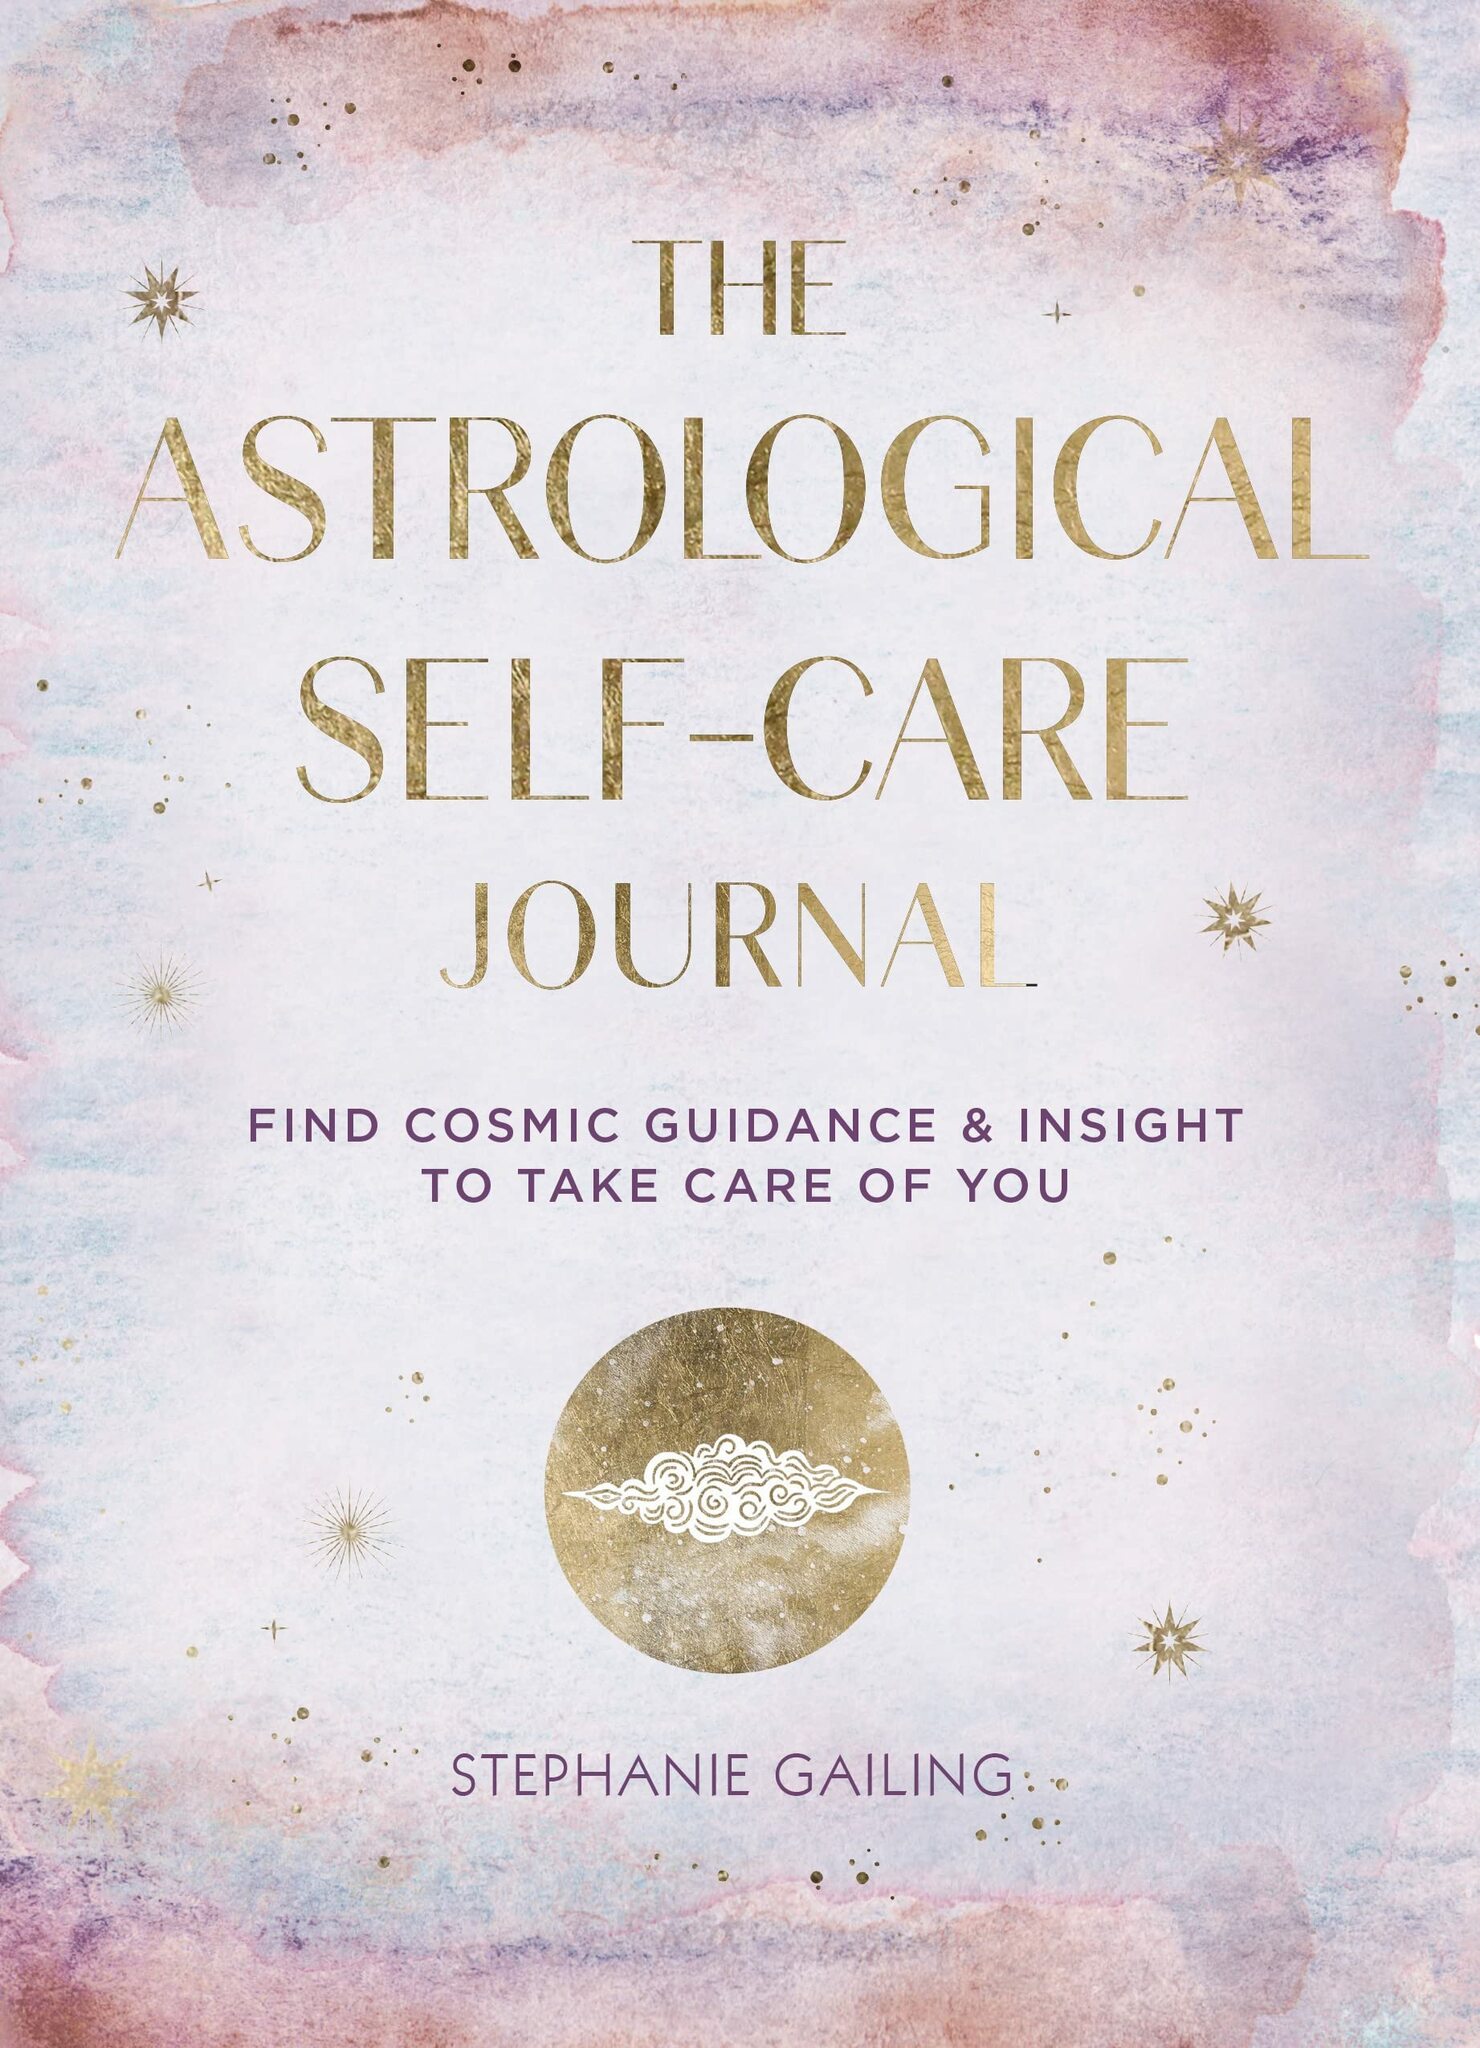 The Astrological self-care journal, Stephanie Gailing